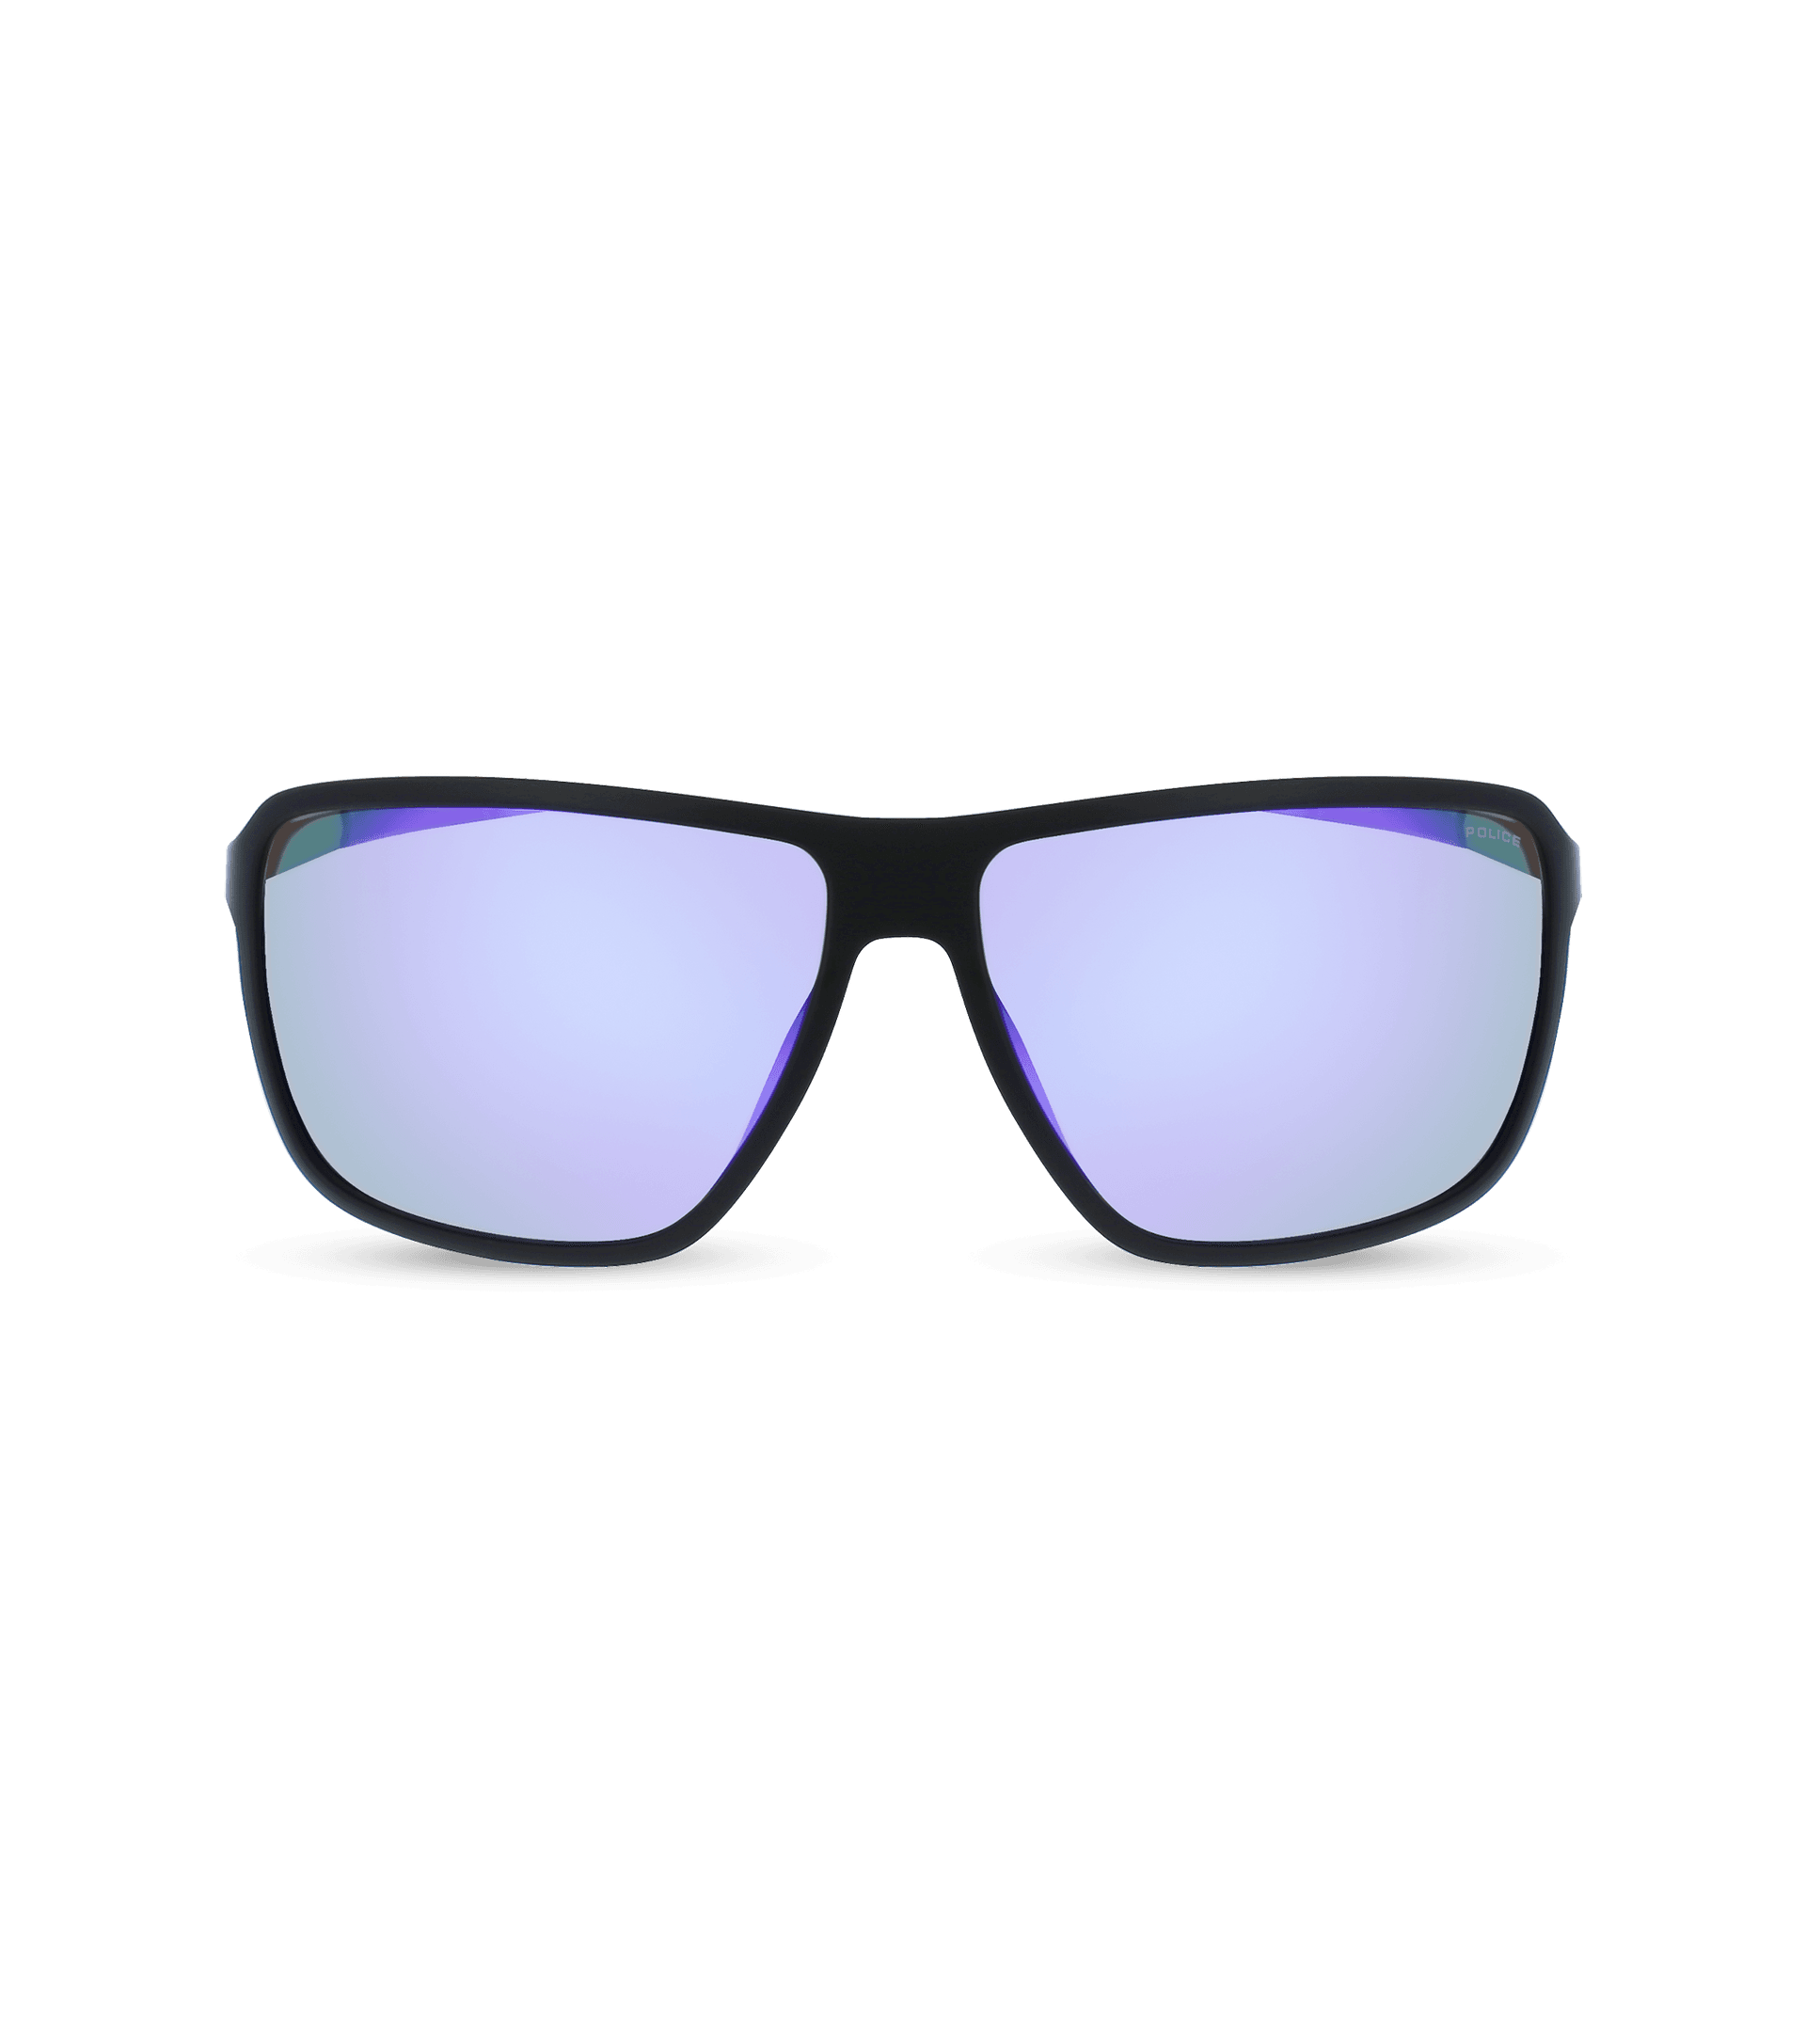 Men's sunglasses Police